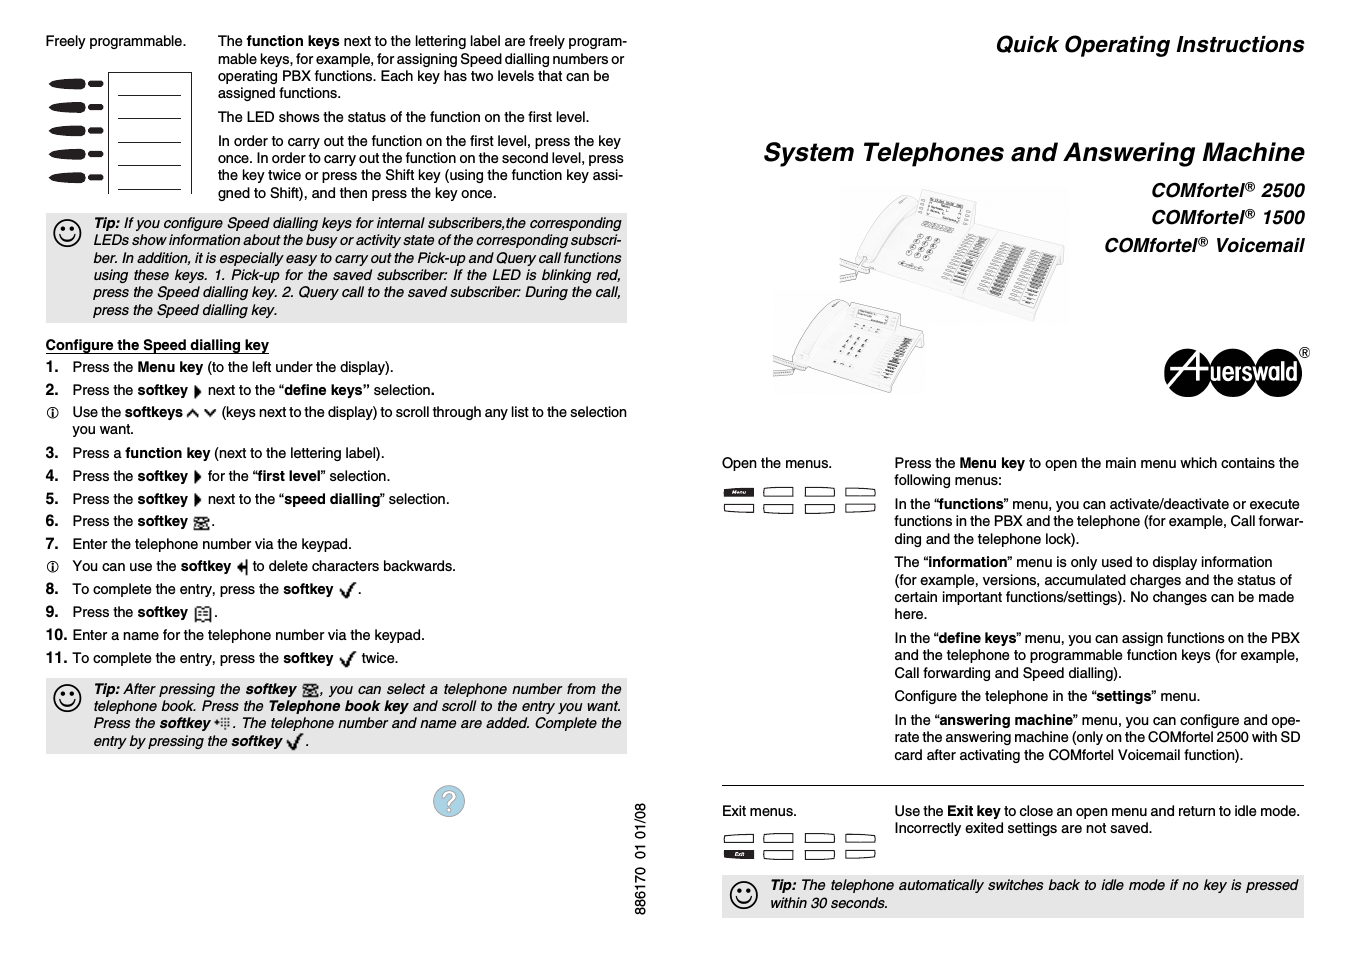 Quick Operating Instructions (1.391 KB) COMfortel 1500